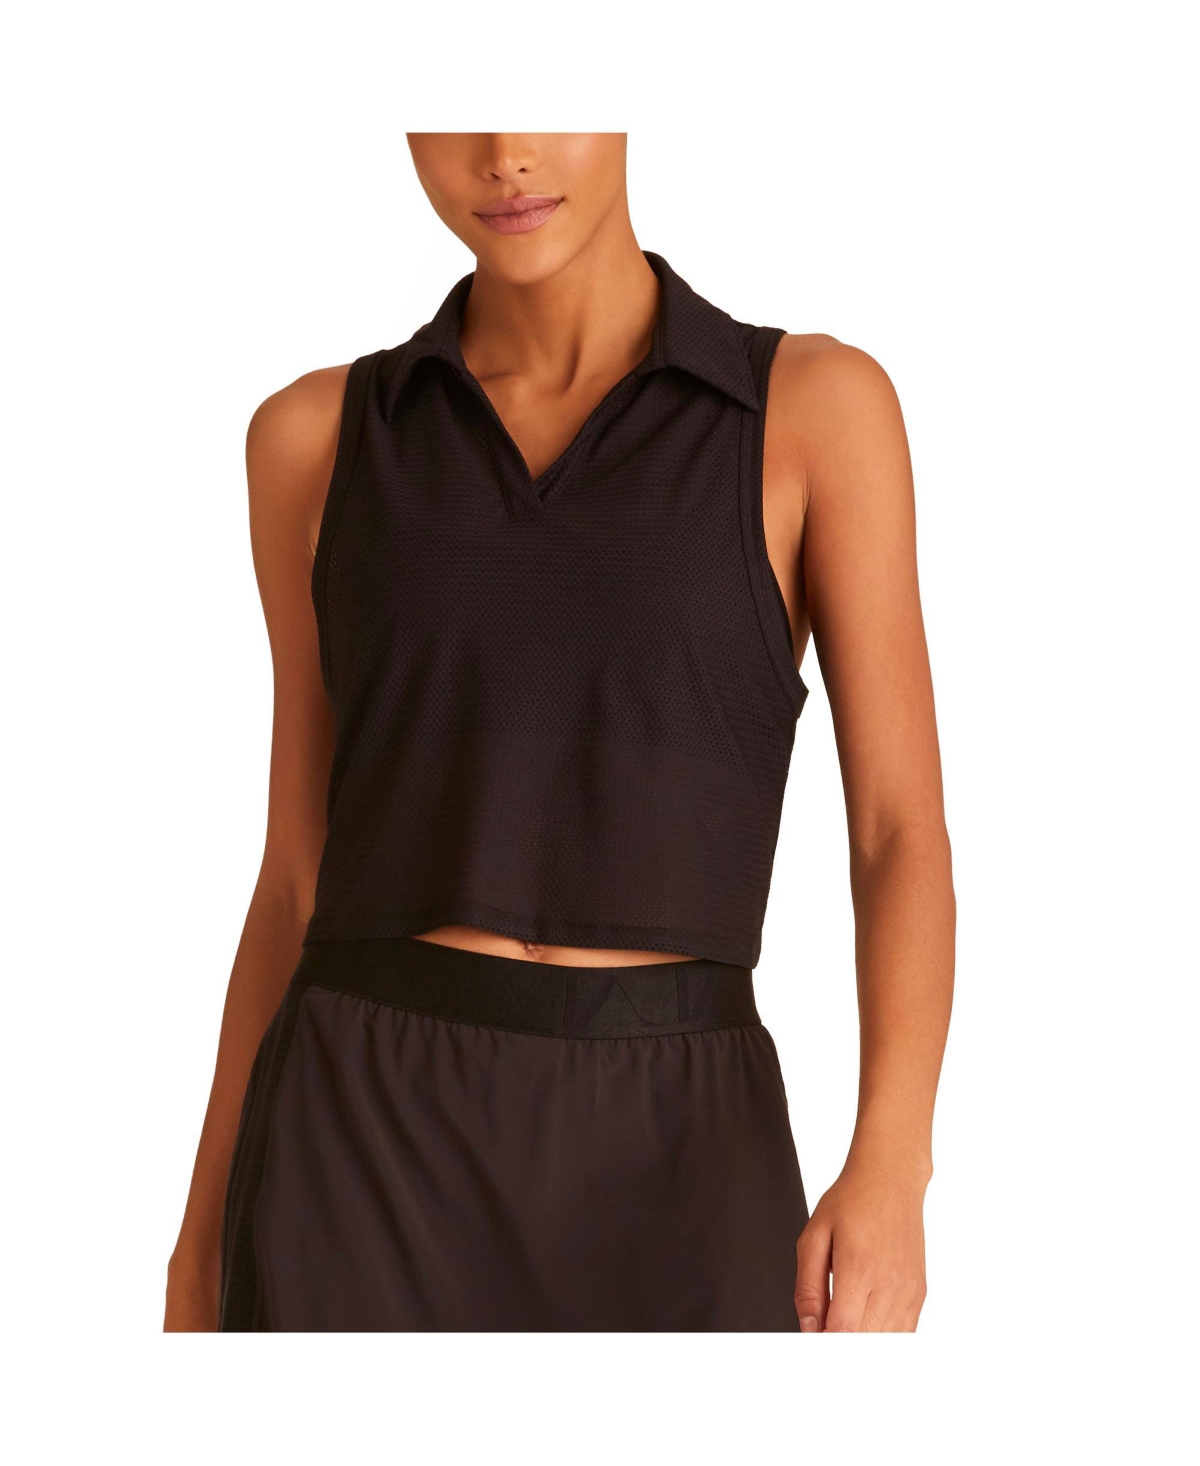 Regular Size Adult Women's Sleeveless Tie Back Polo Top - Black